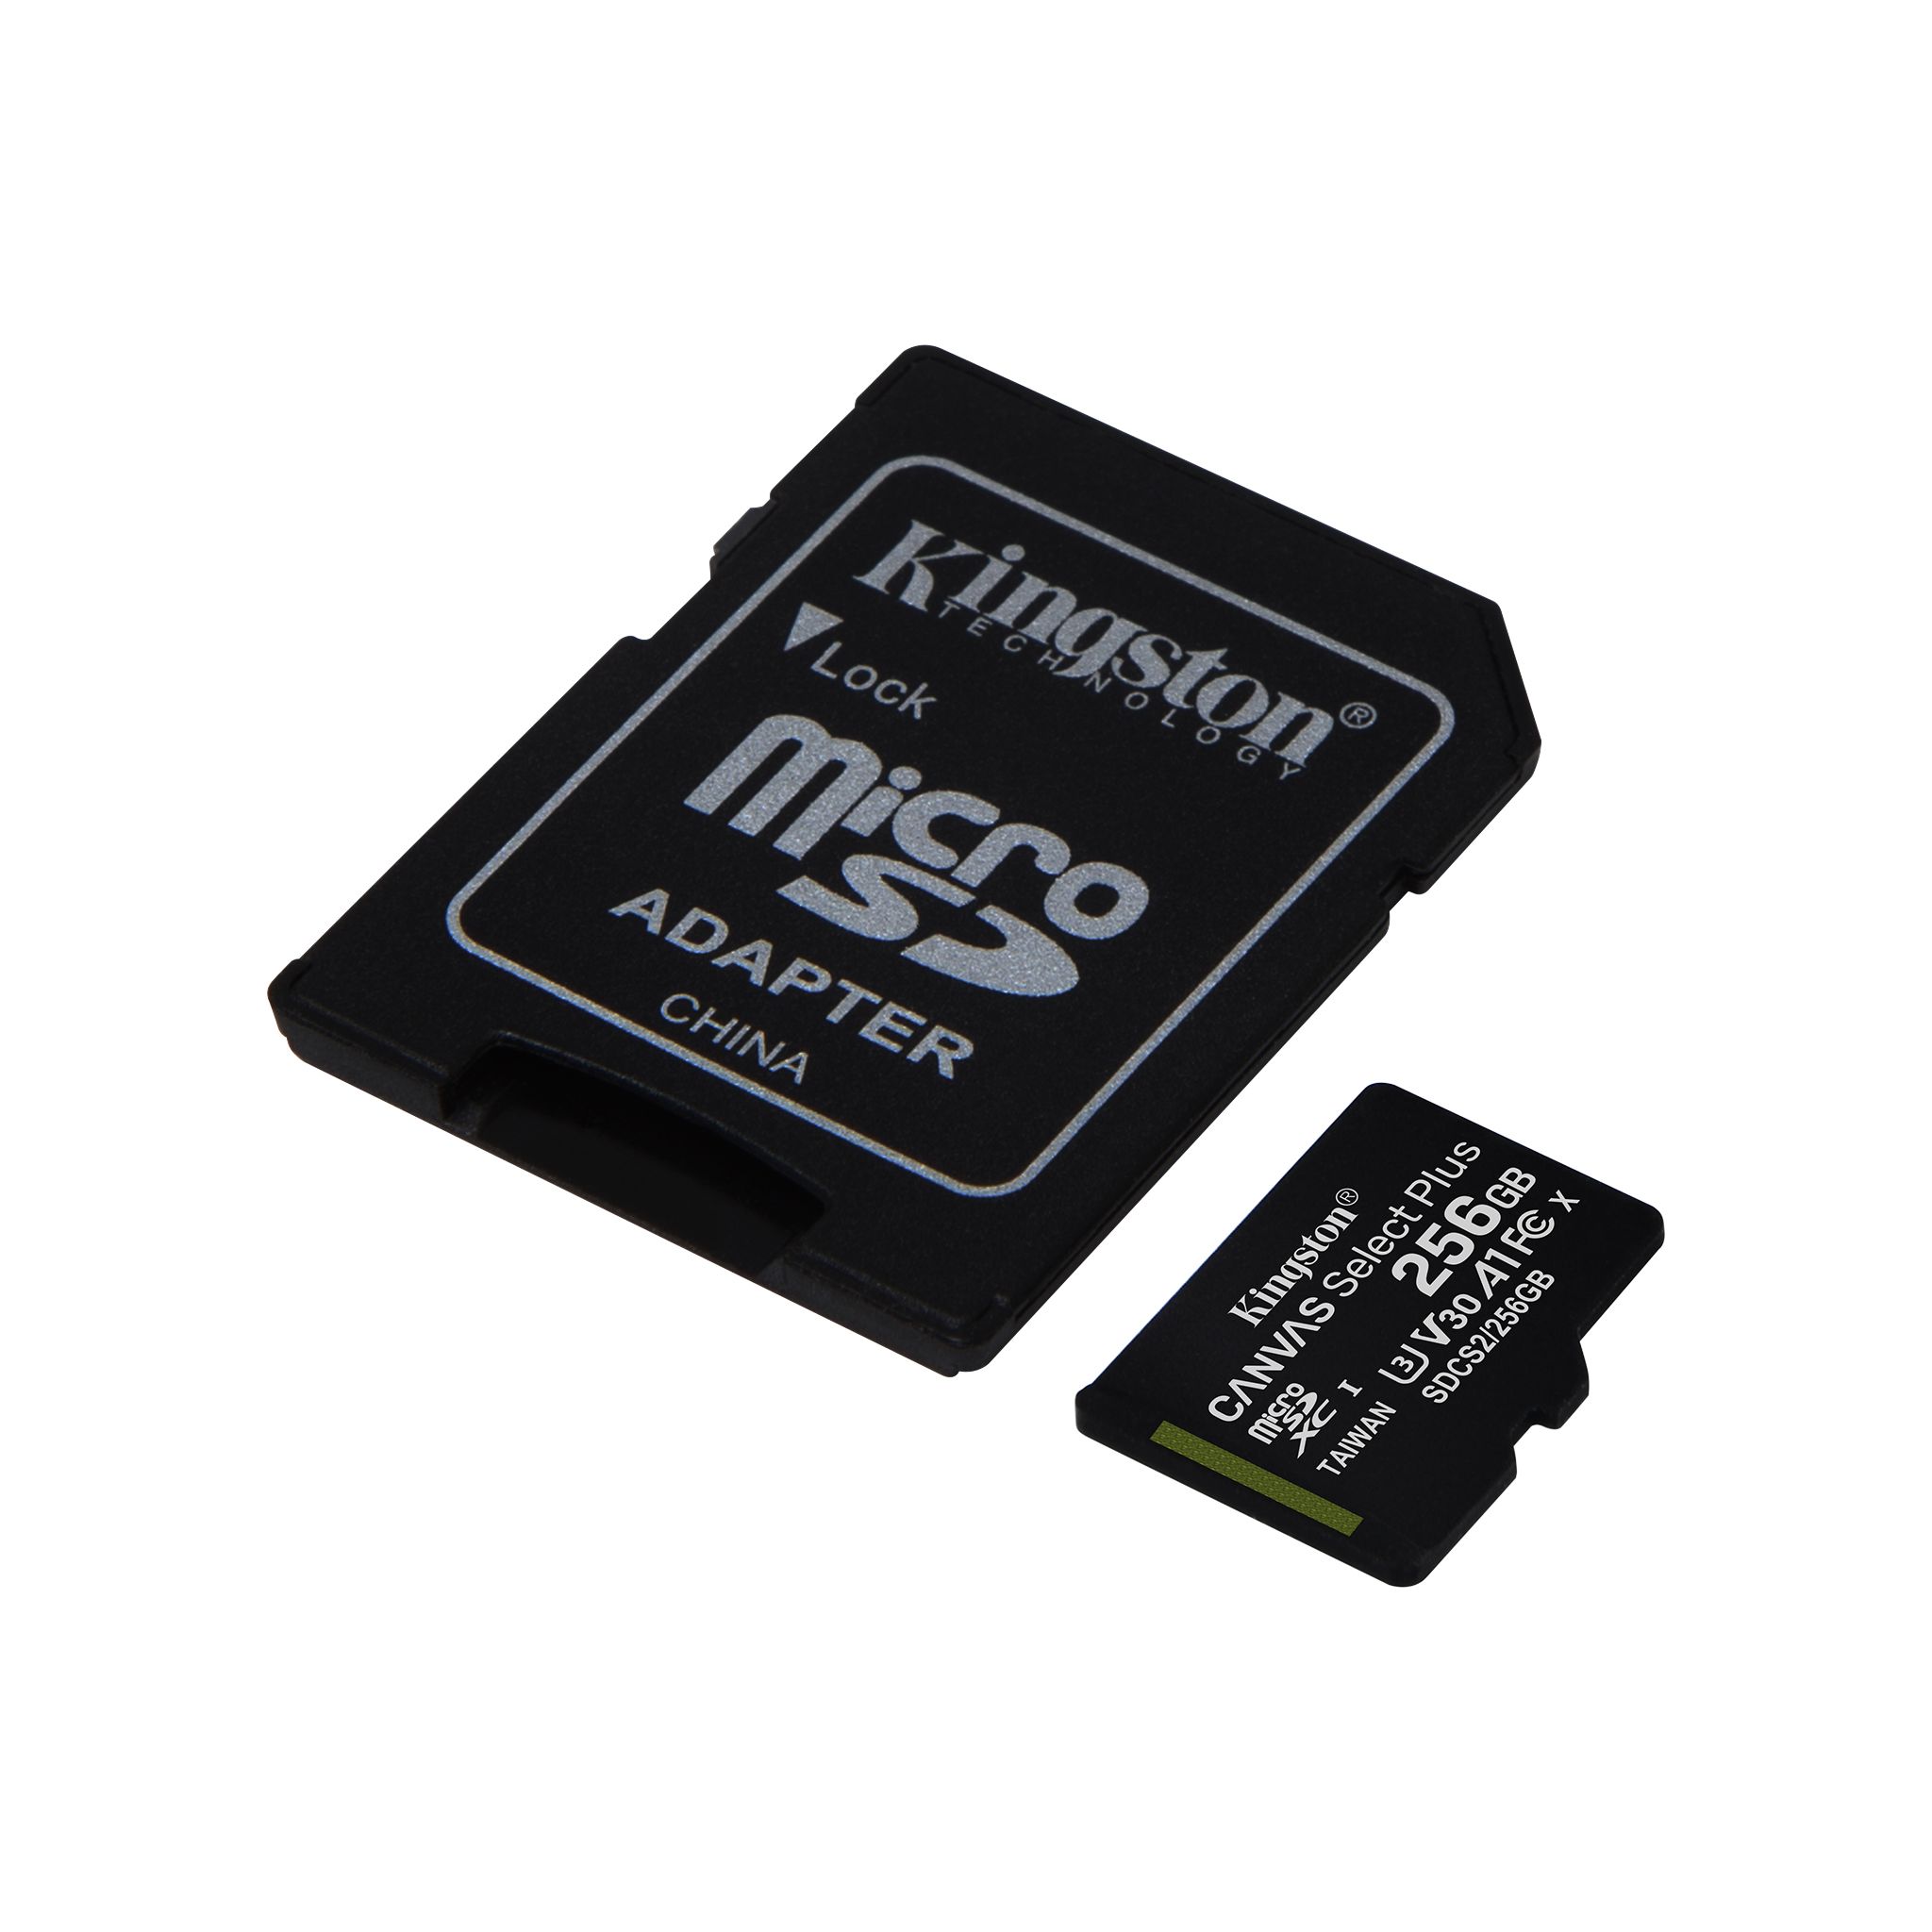 100MBs Works with Kingston Kingston 128GB Xiaomi Mi 5s 64GB MicroSDXC Canvas Select Plus Card Verified by SanFlash. 